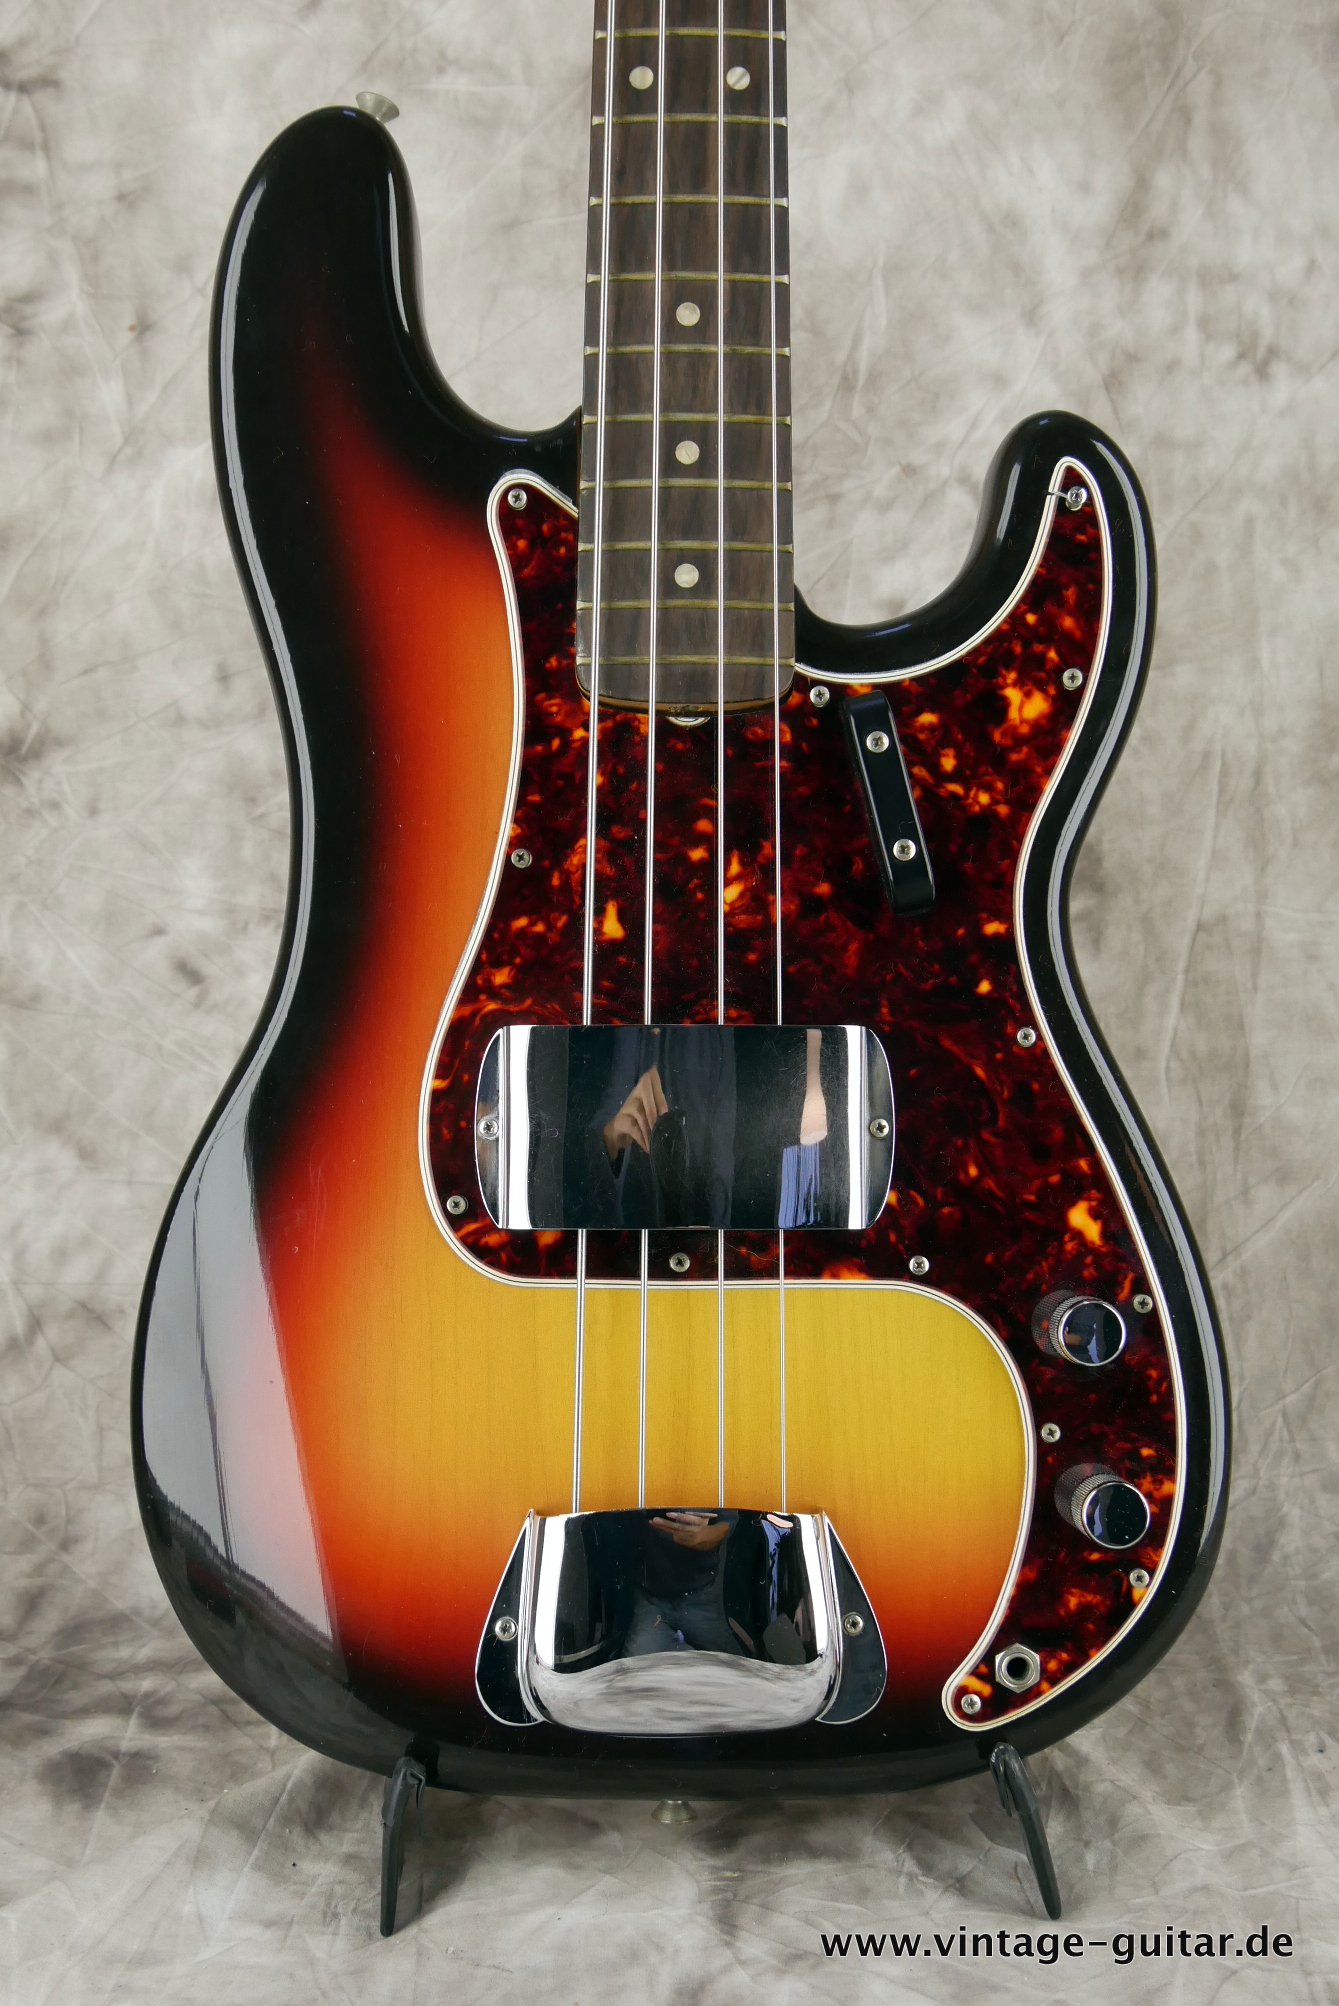 Fender-Precision-Bass-1965-sunburst-mint-condition-002.JPG